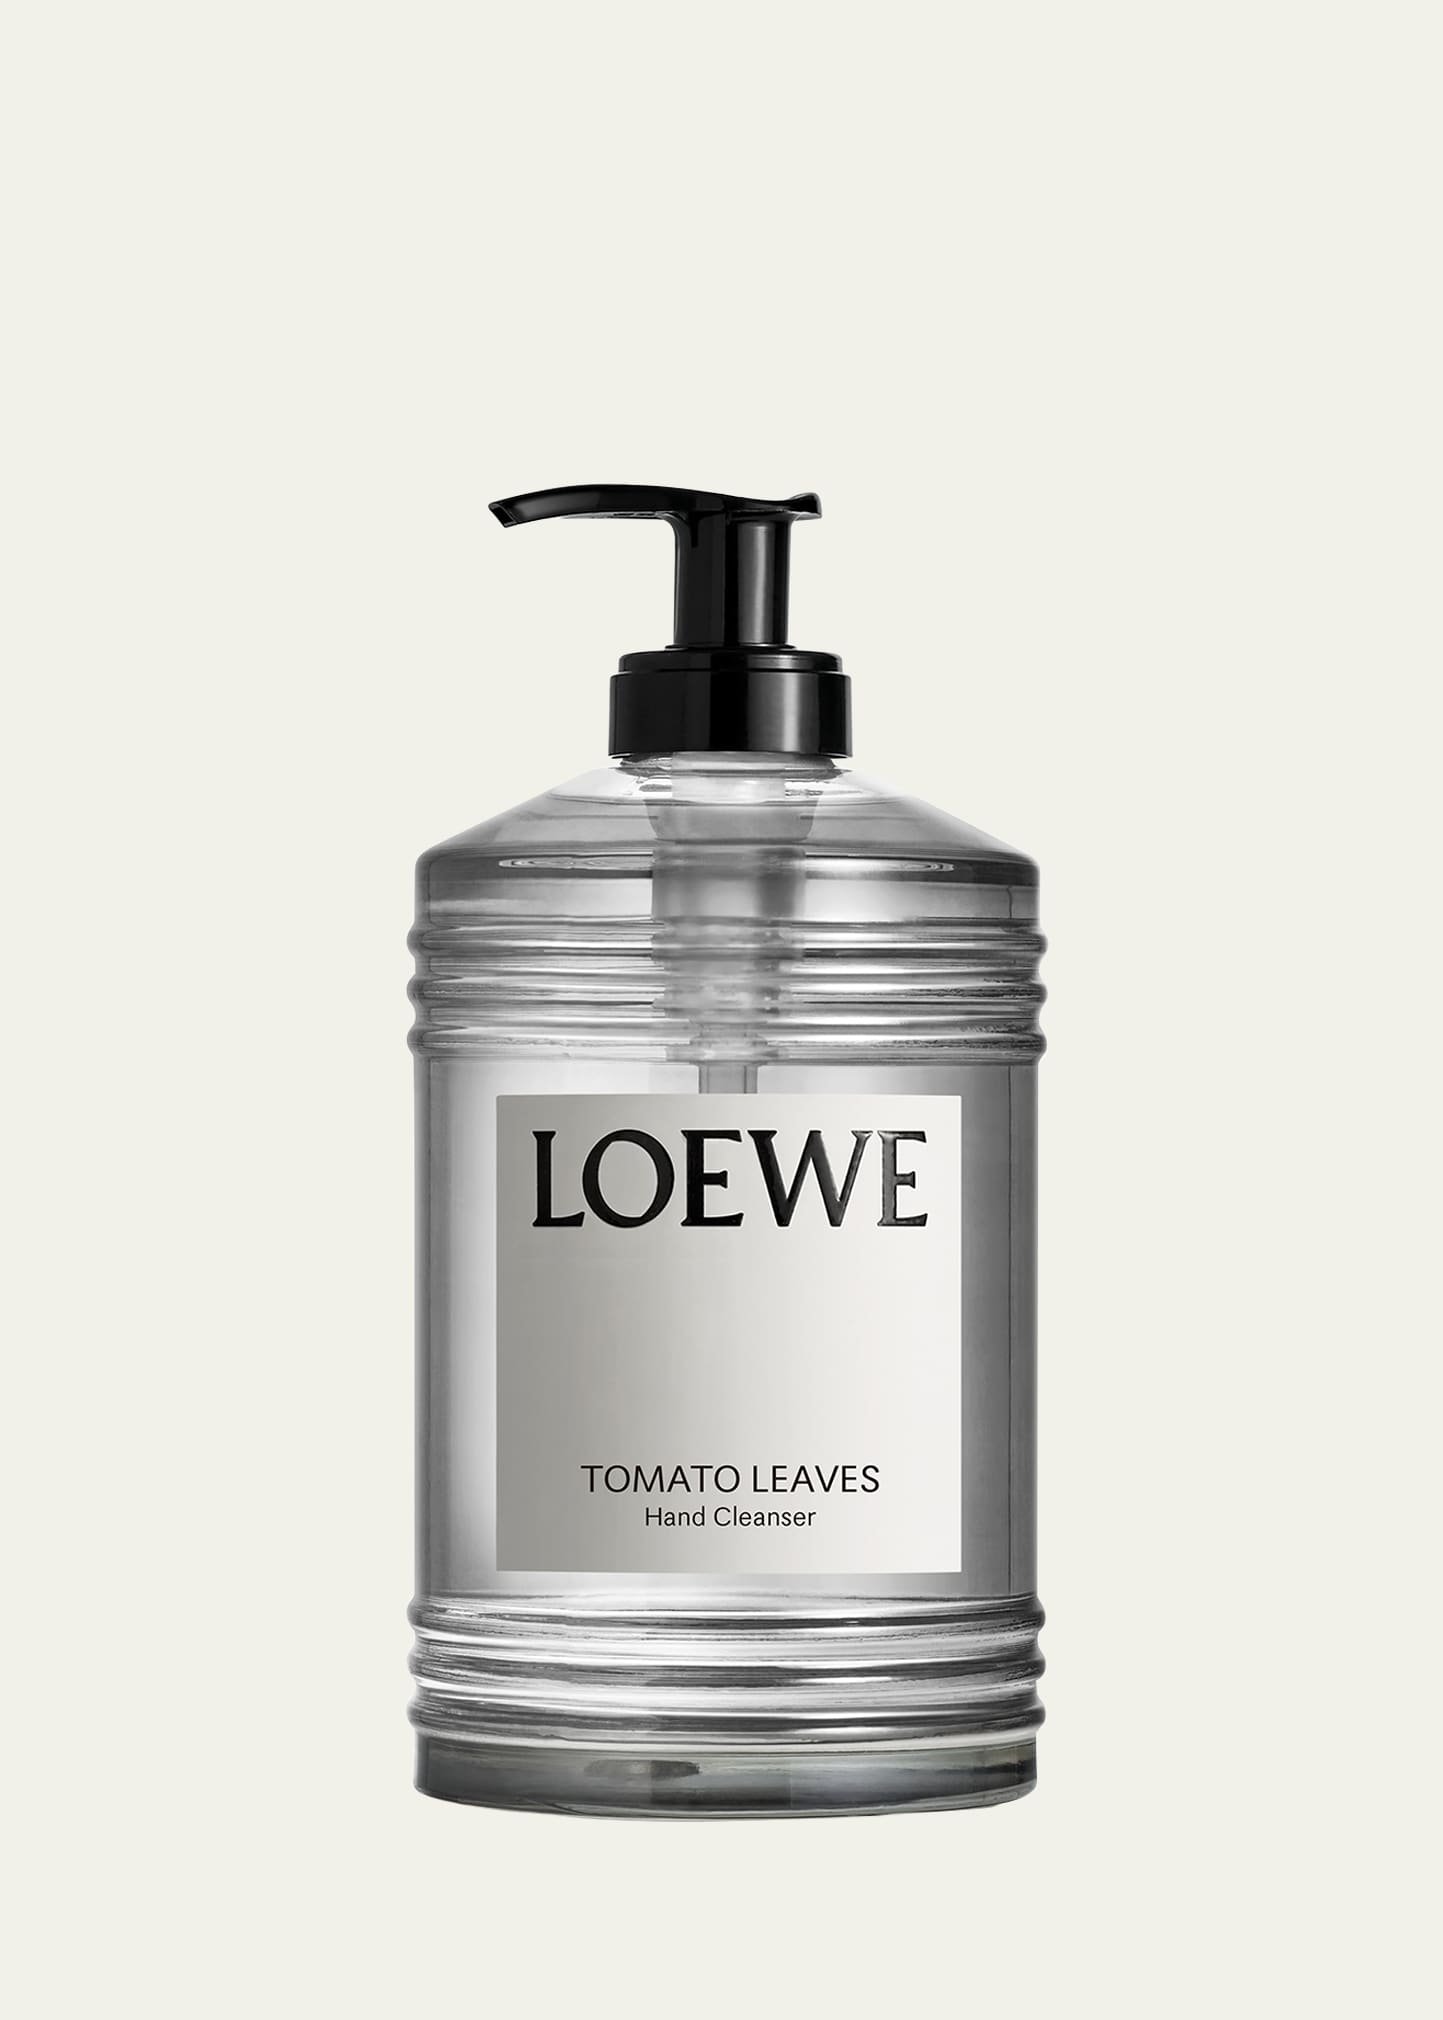 Loewe Tomato Leaves Hand Cleanser, 12 Oz.